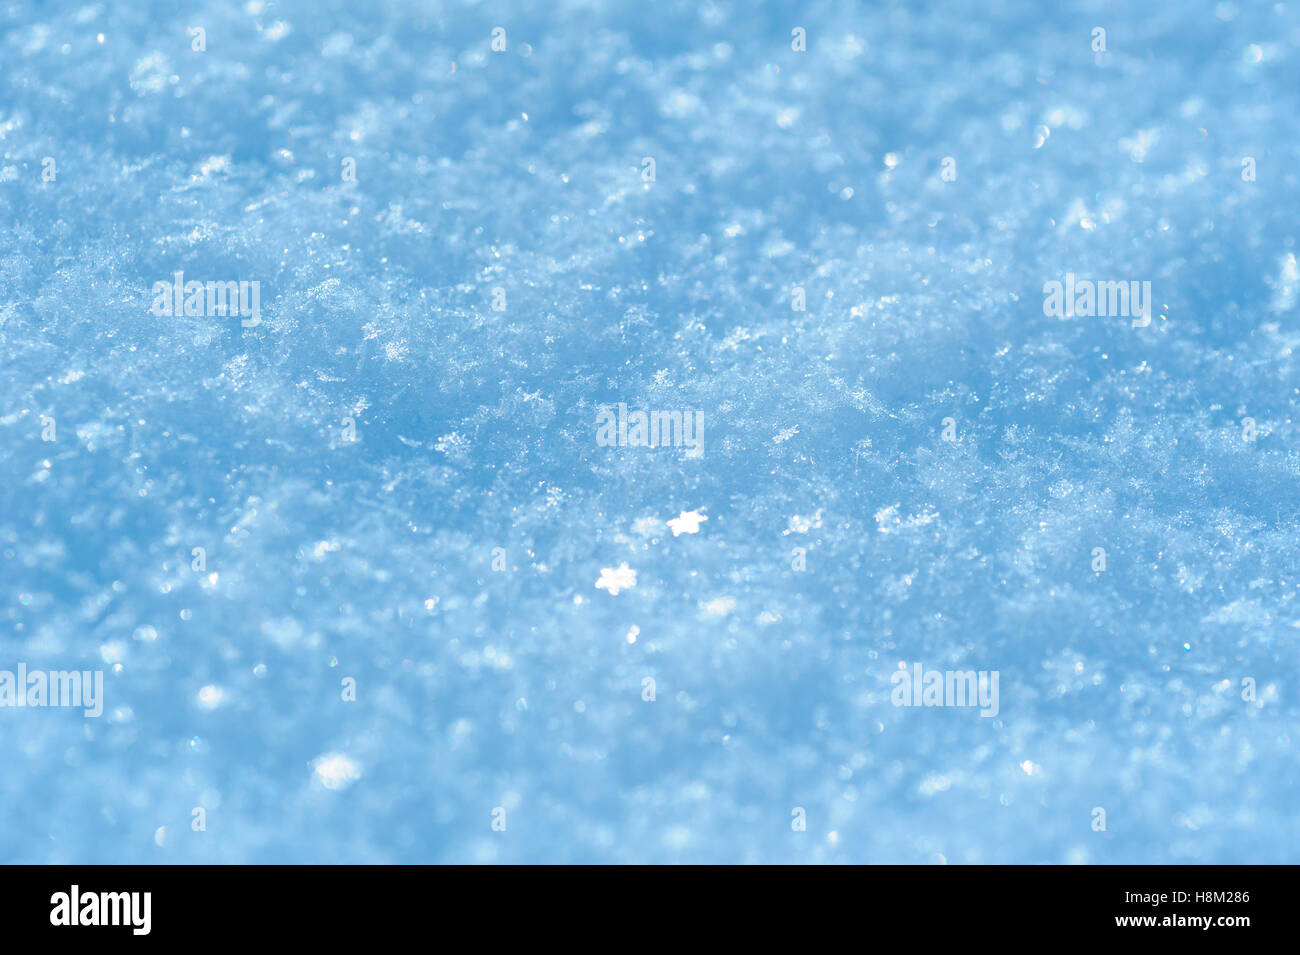 Blue texture snow winter Stock Photo